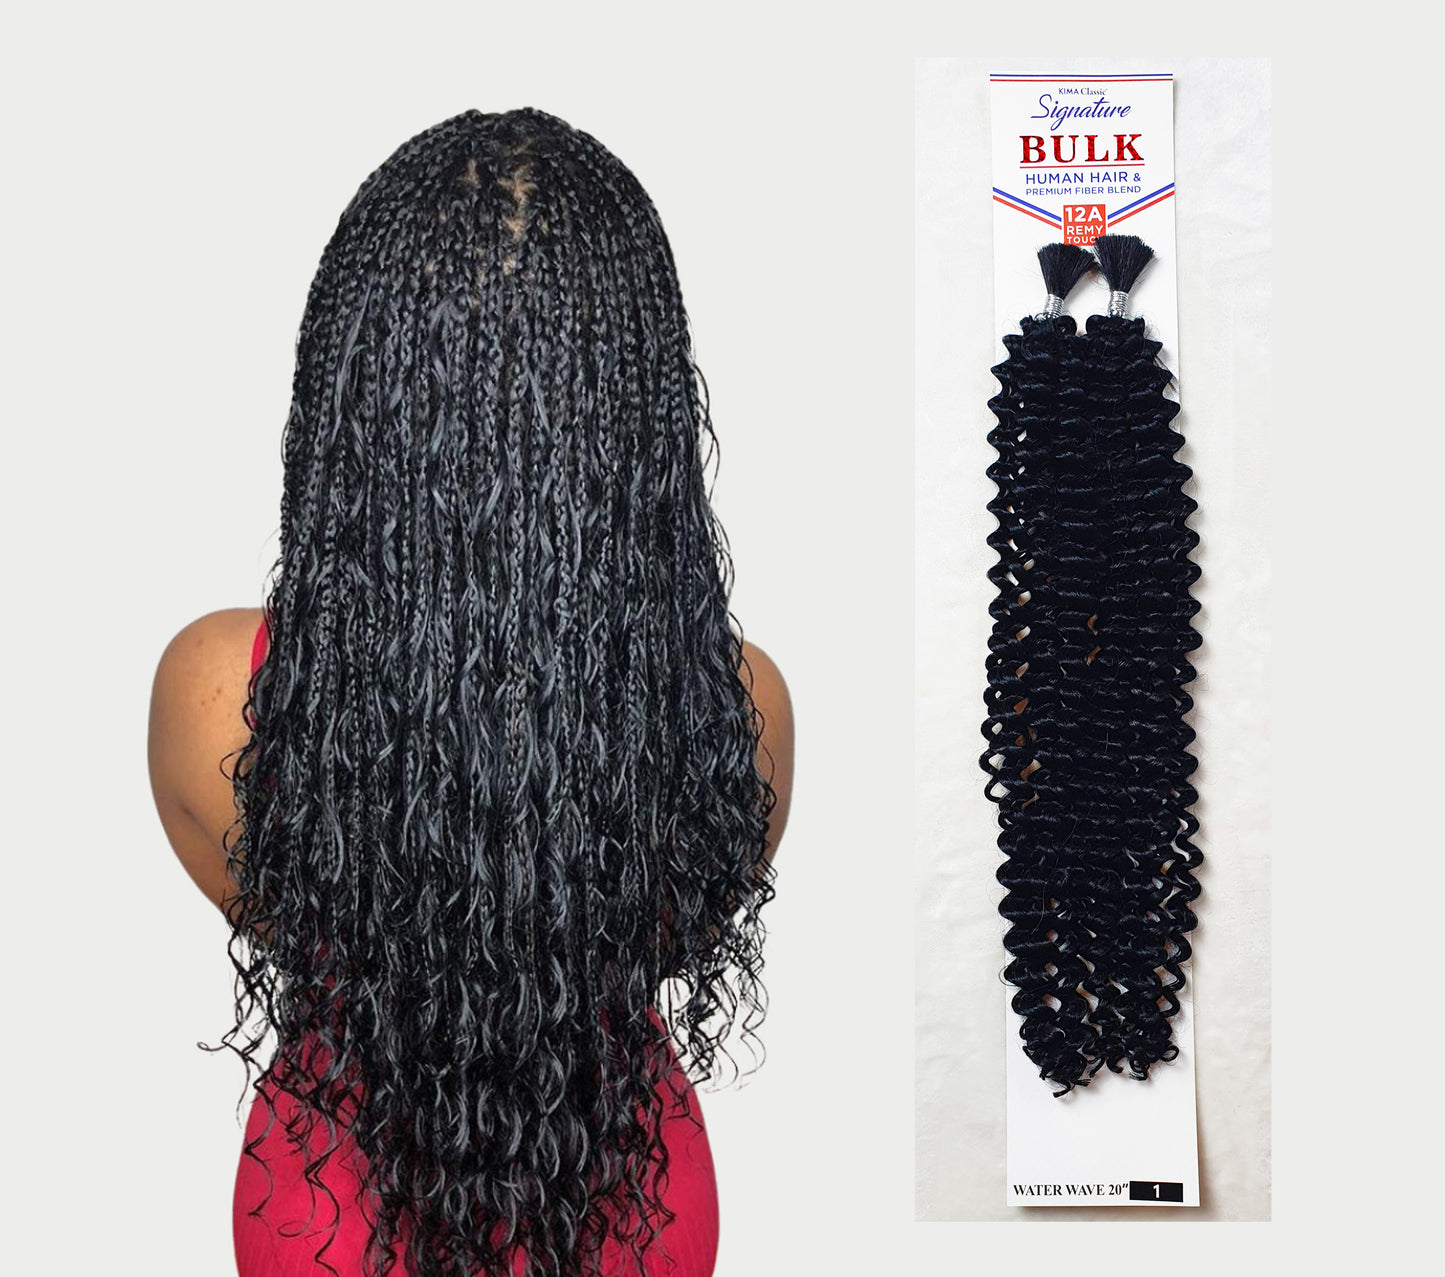 Human Hair Blend Braids Kima Signature Bulk- Water Wave 20" Colour 1 Deep Black